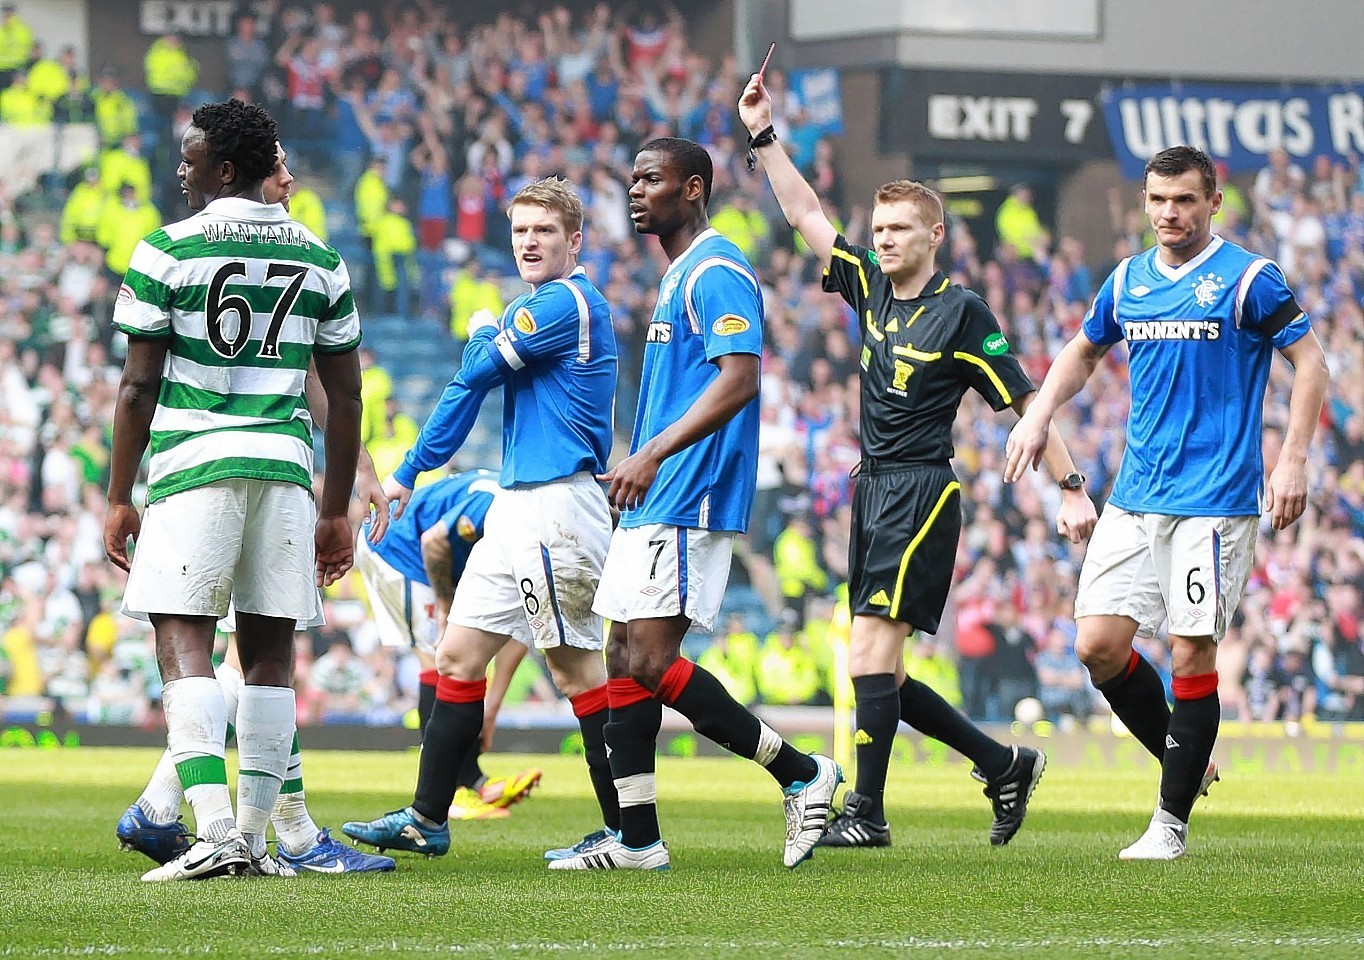 Premiership Celtic take on Championship side Rangers on Sunday